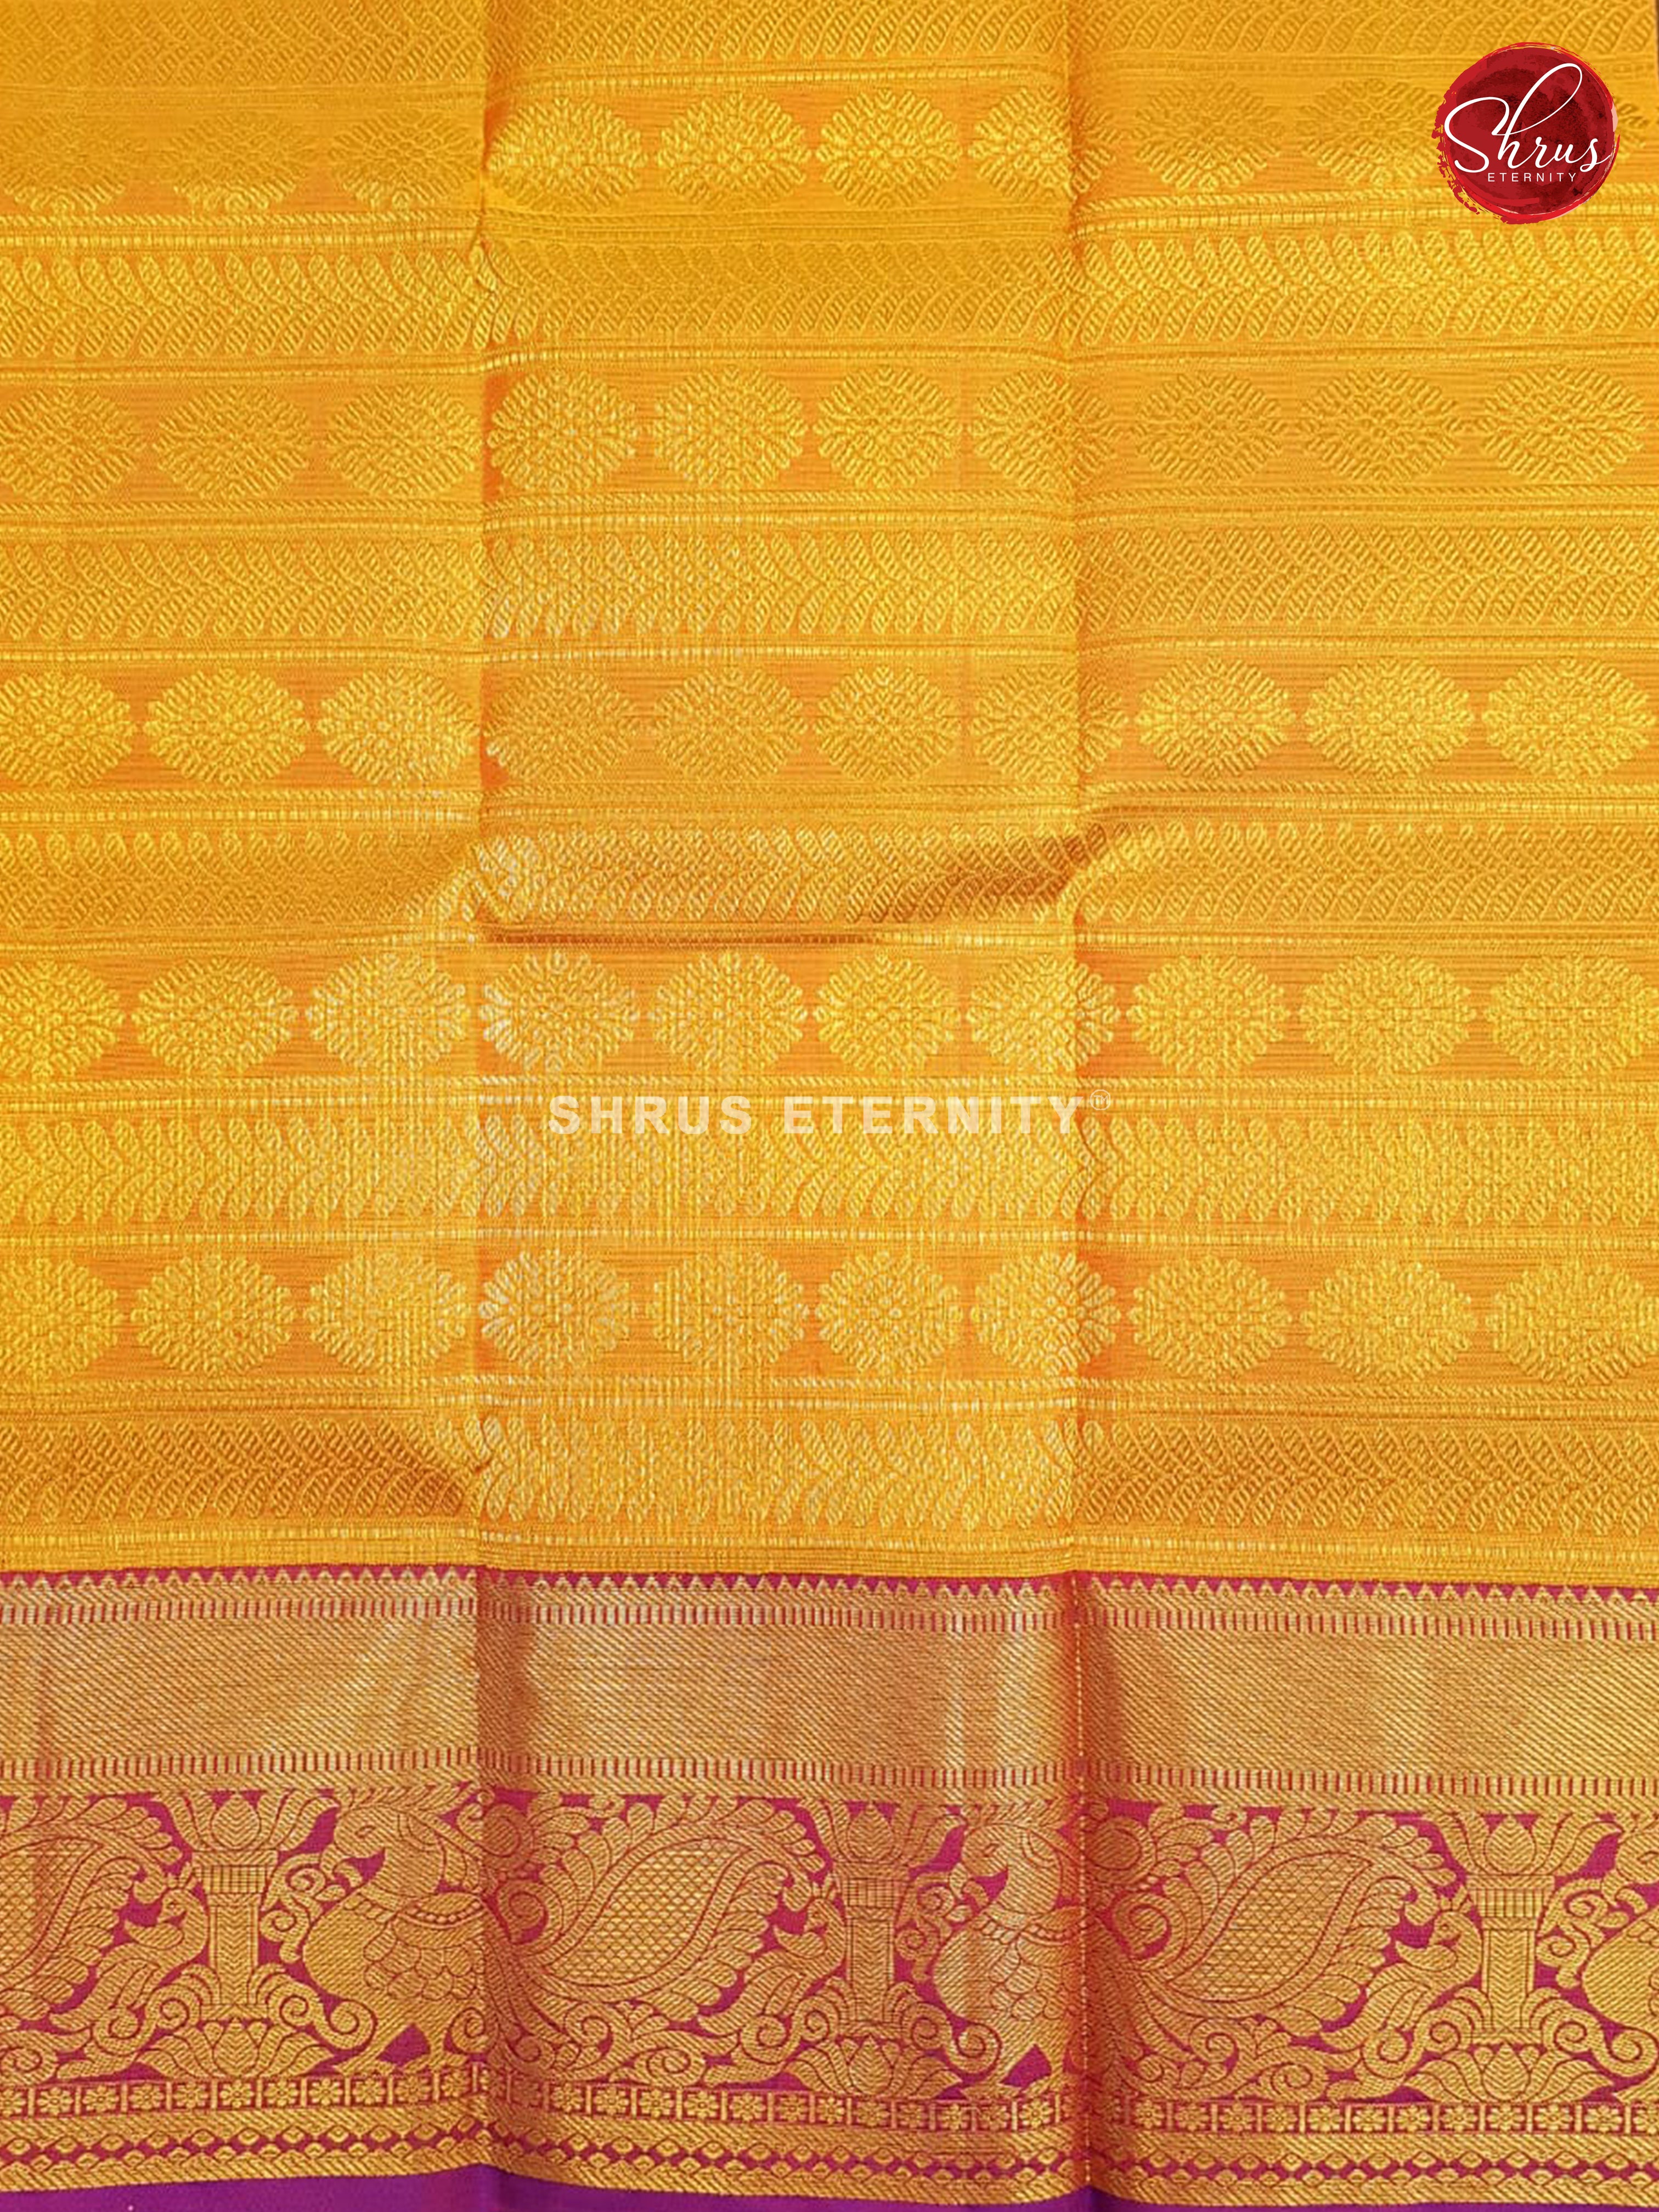 Violet & Mambala Yellow - Pattu Pavadai 0-2 Years - Shop on ShrusEternity.com